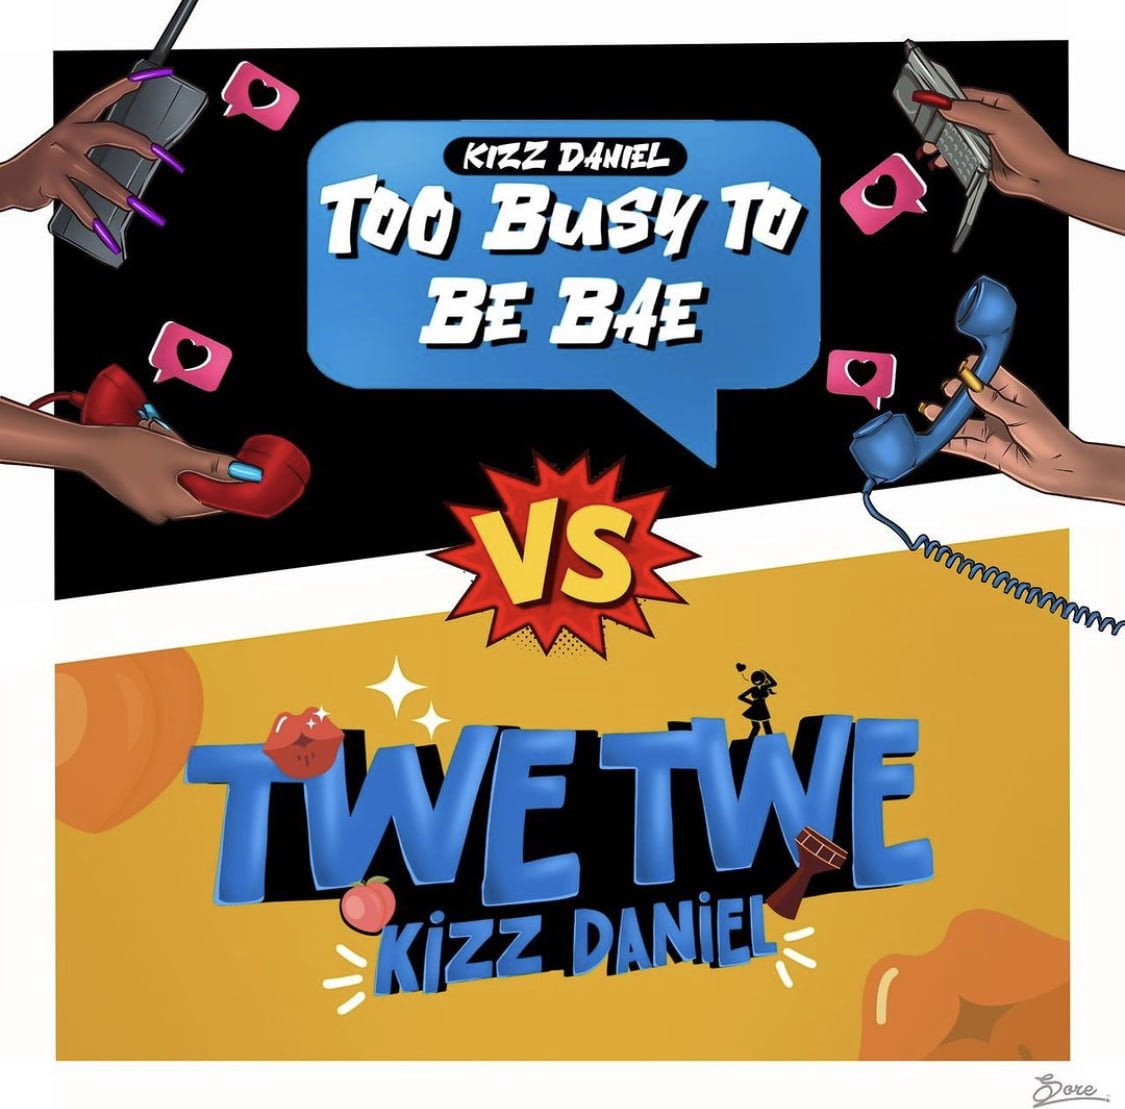 Press Play: Kizz Daniel Drop New Singles “Twe Twe” and “Too Busy To Be Bae”